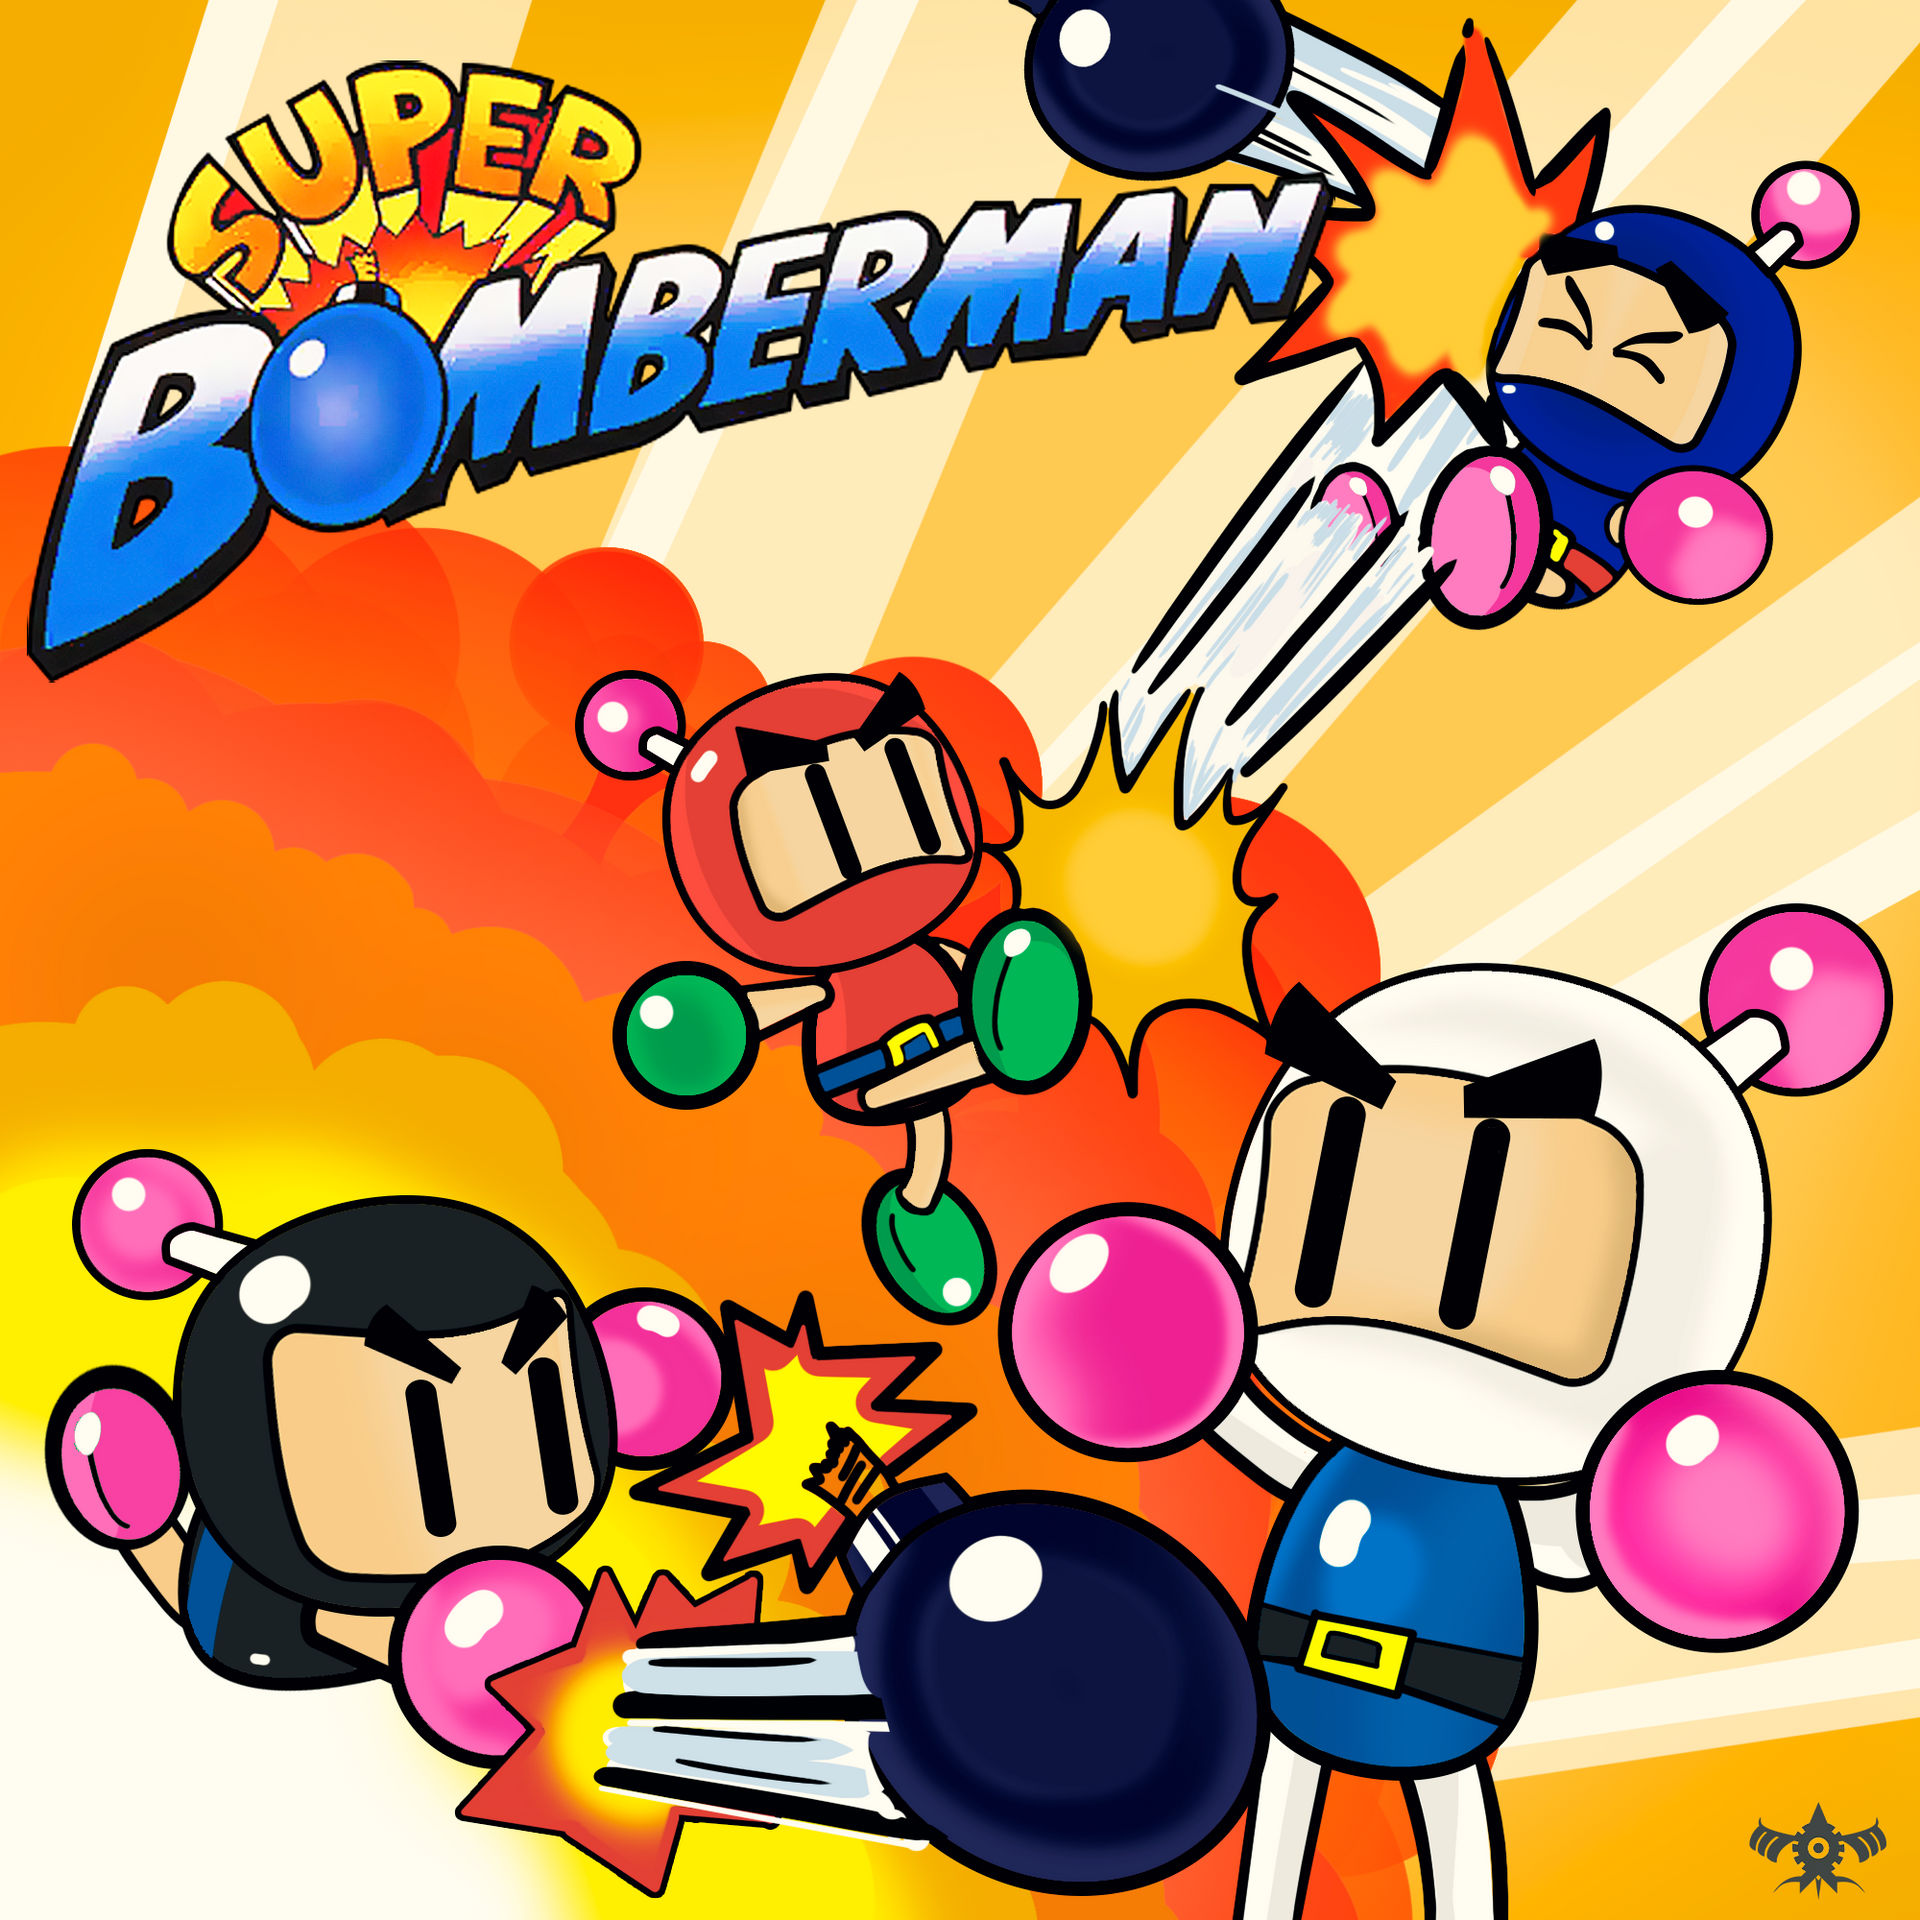 Super Bomberman (SNES)